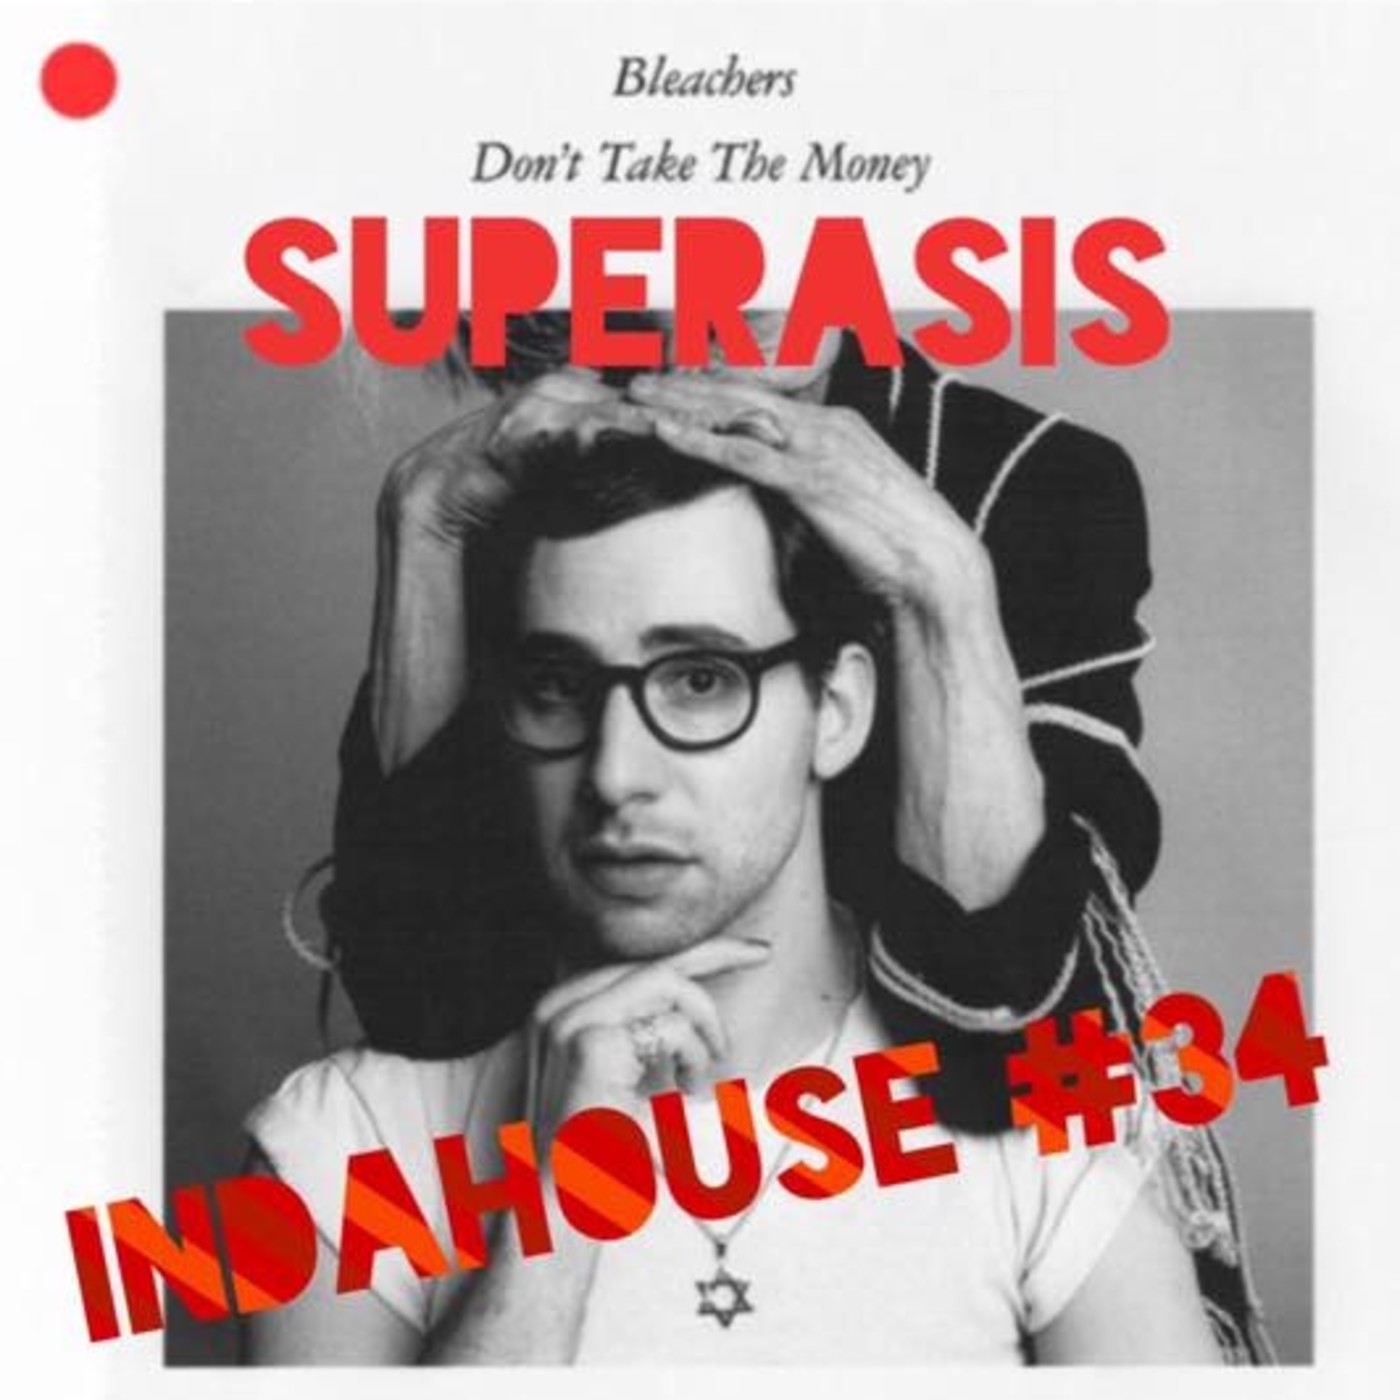 34.-Superasis Indahouse-Radioshow@Radio New York Club.19.05.17